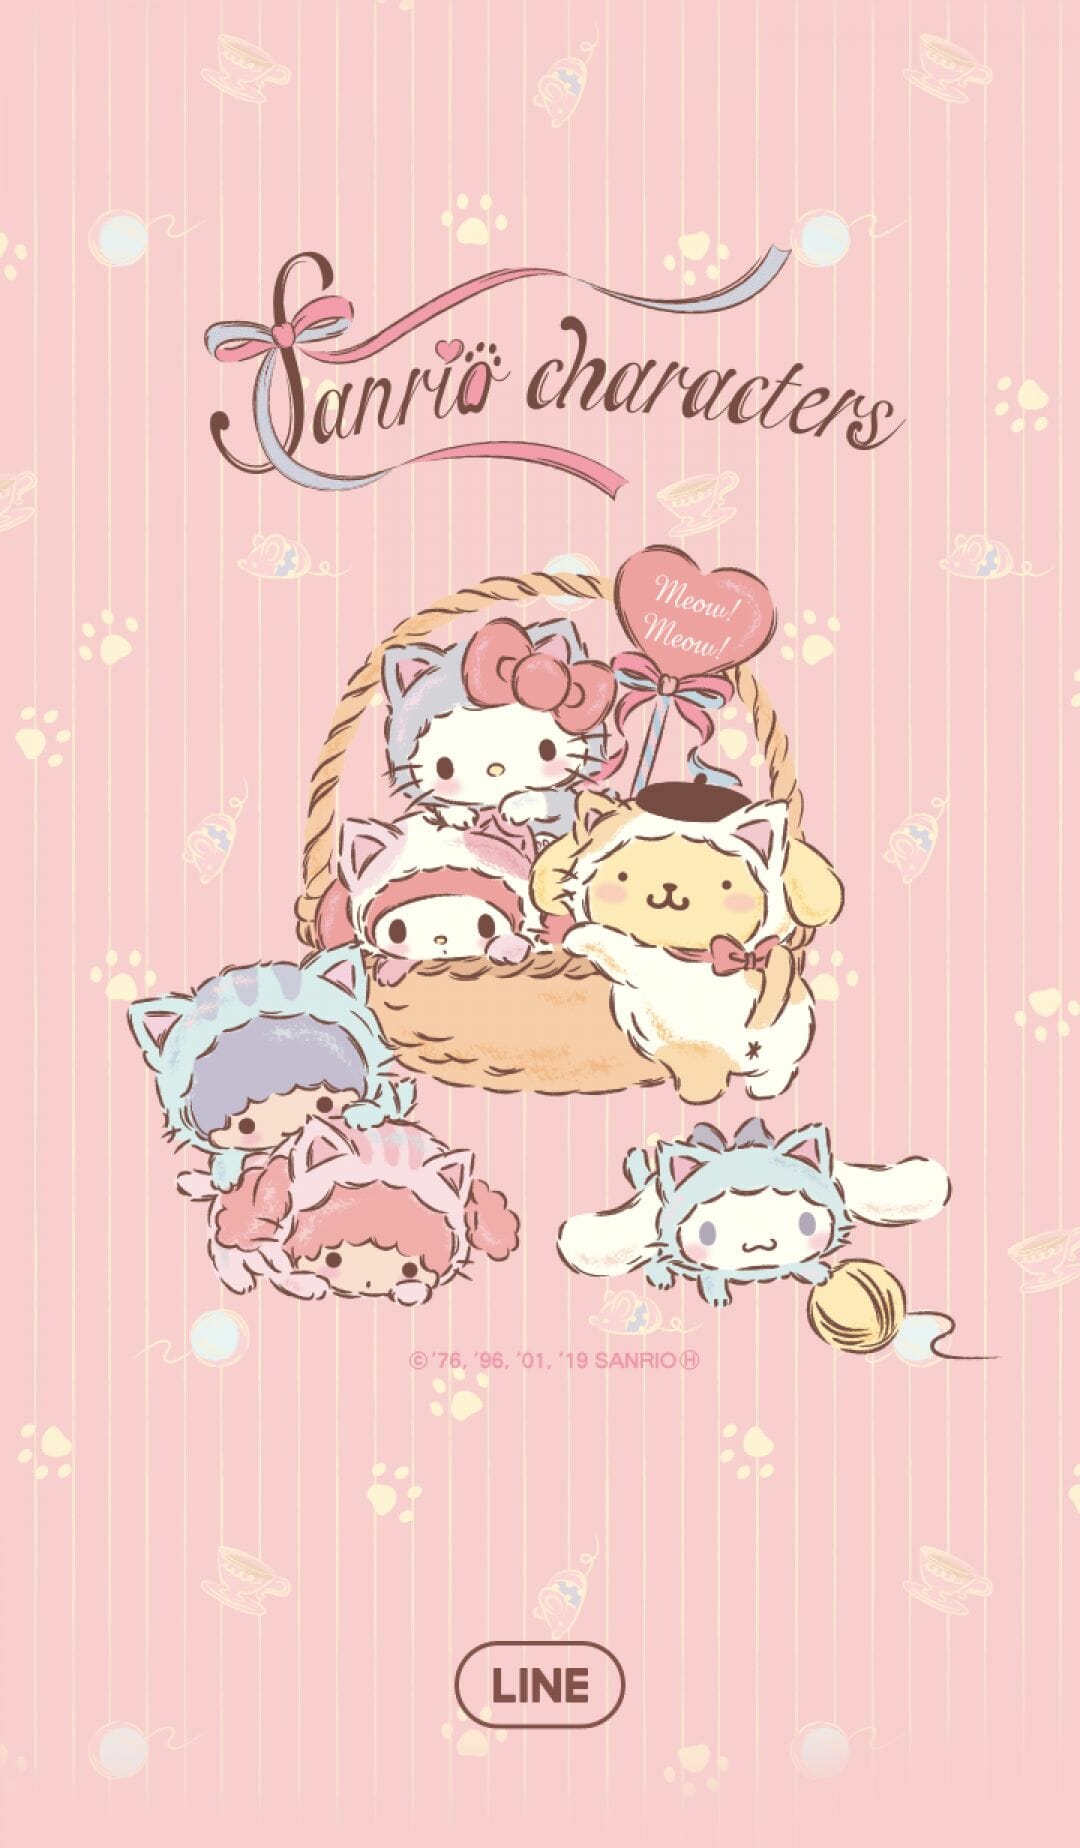 SANRIO CHARACTERS (Kitties). Line Wallpaper in 2019. Hello / iPhone HD Wallpaper Background Download HD Wallpaper (Desktop Background / Android / iPhone) (1080p, 4k) (1080x1848) (2022)